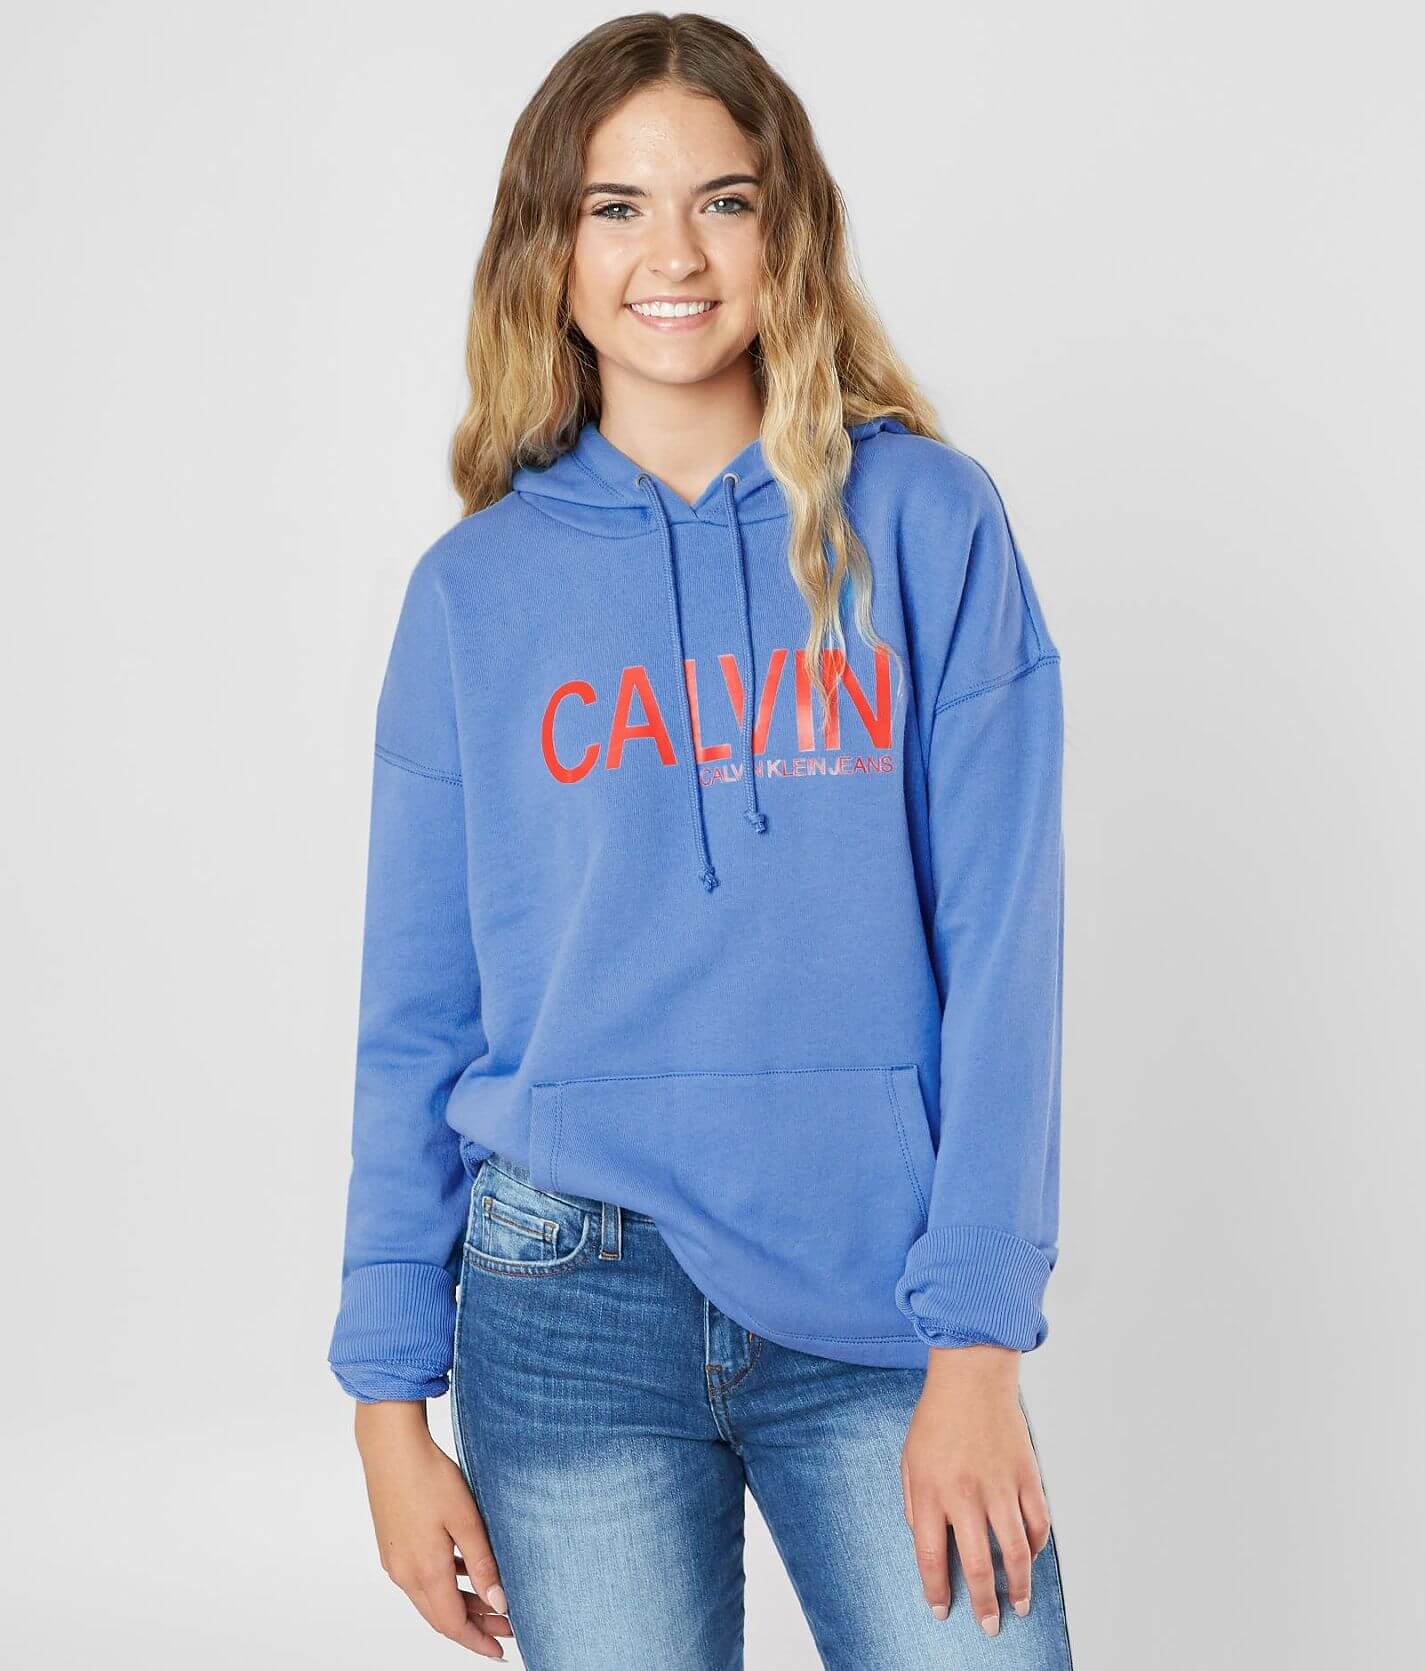 Calvin Klein Logo Hooded Sweatshirt - Women's Sweatshirts in Regatta |  Buckle